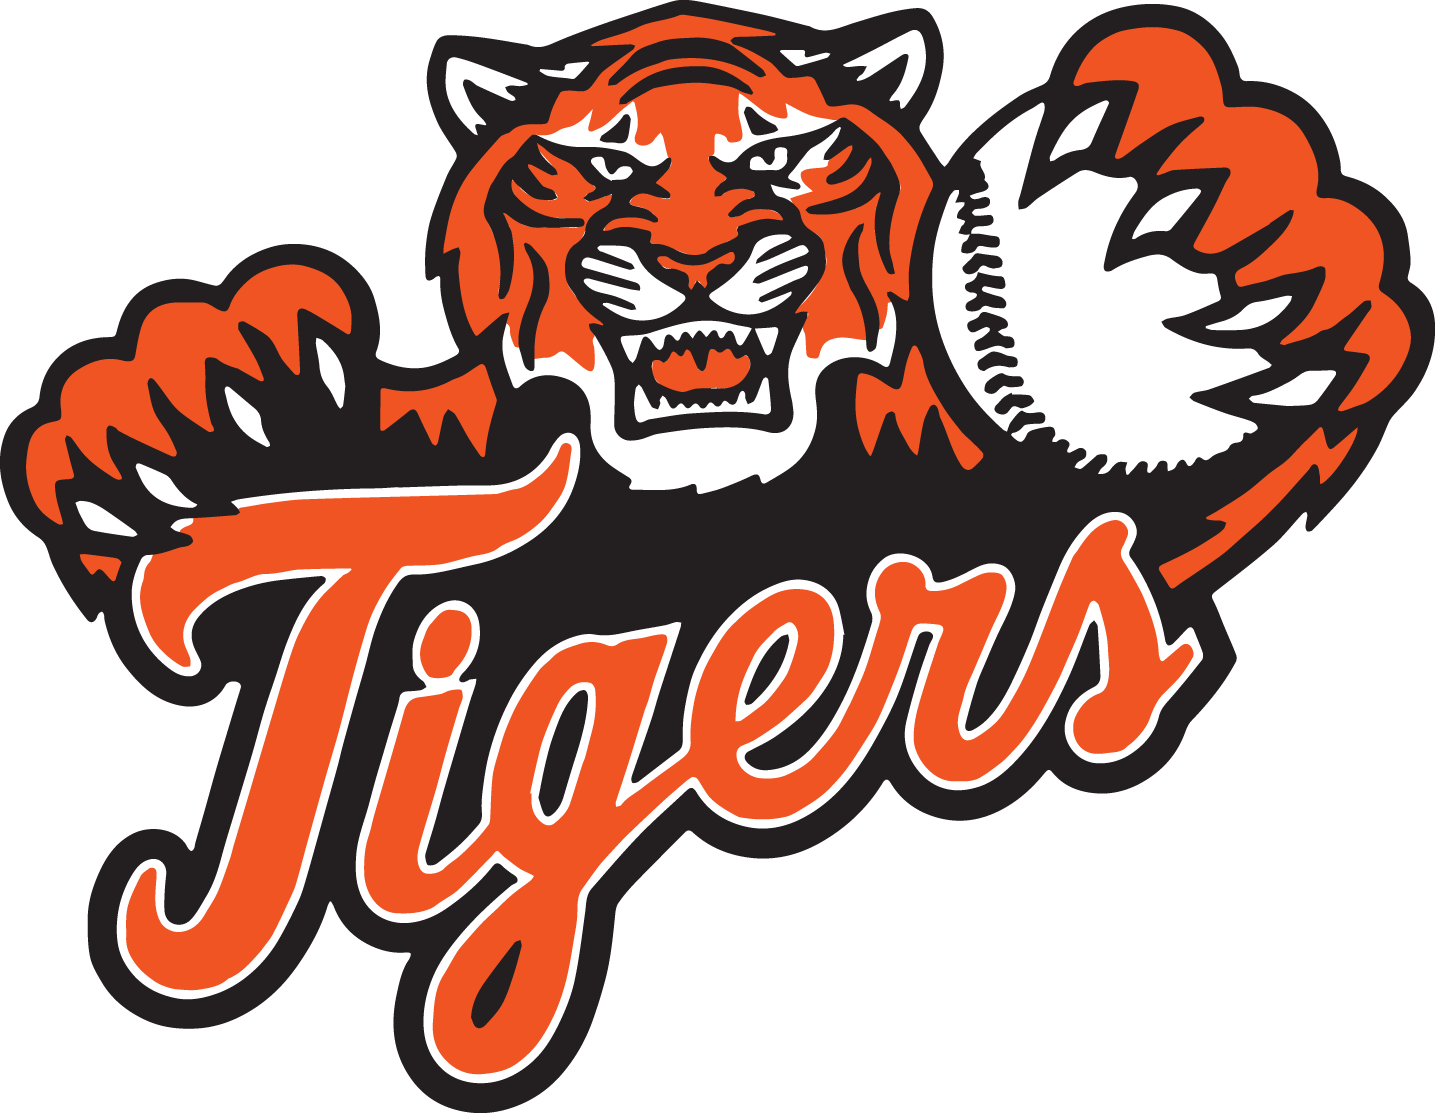 1435 X 1113 Png 189kb - Clemson Tigers Baseball Logo Clipart (1435x1113), Png Download